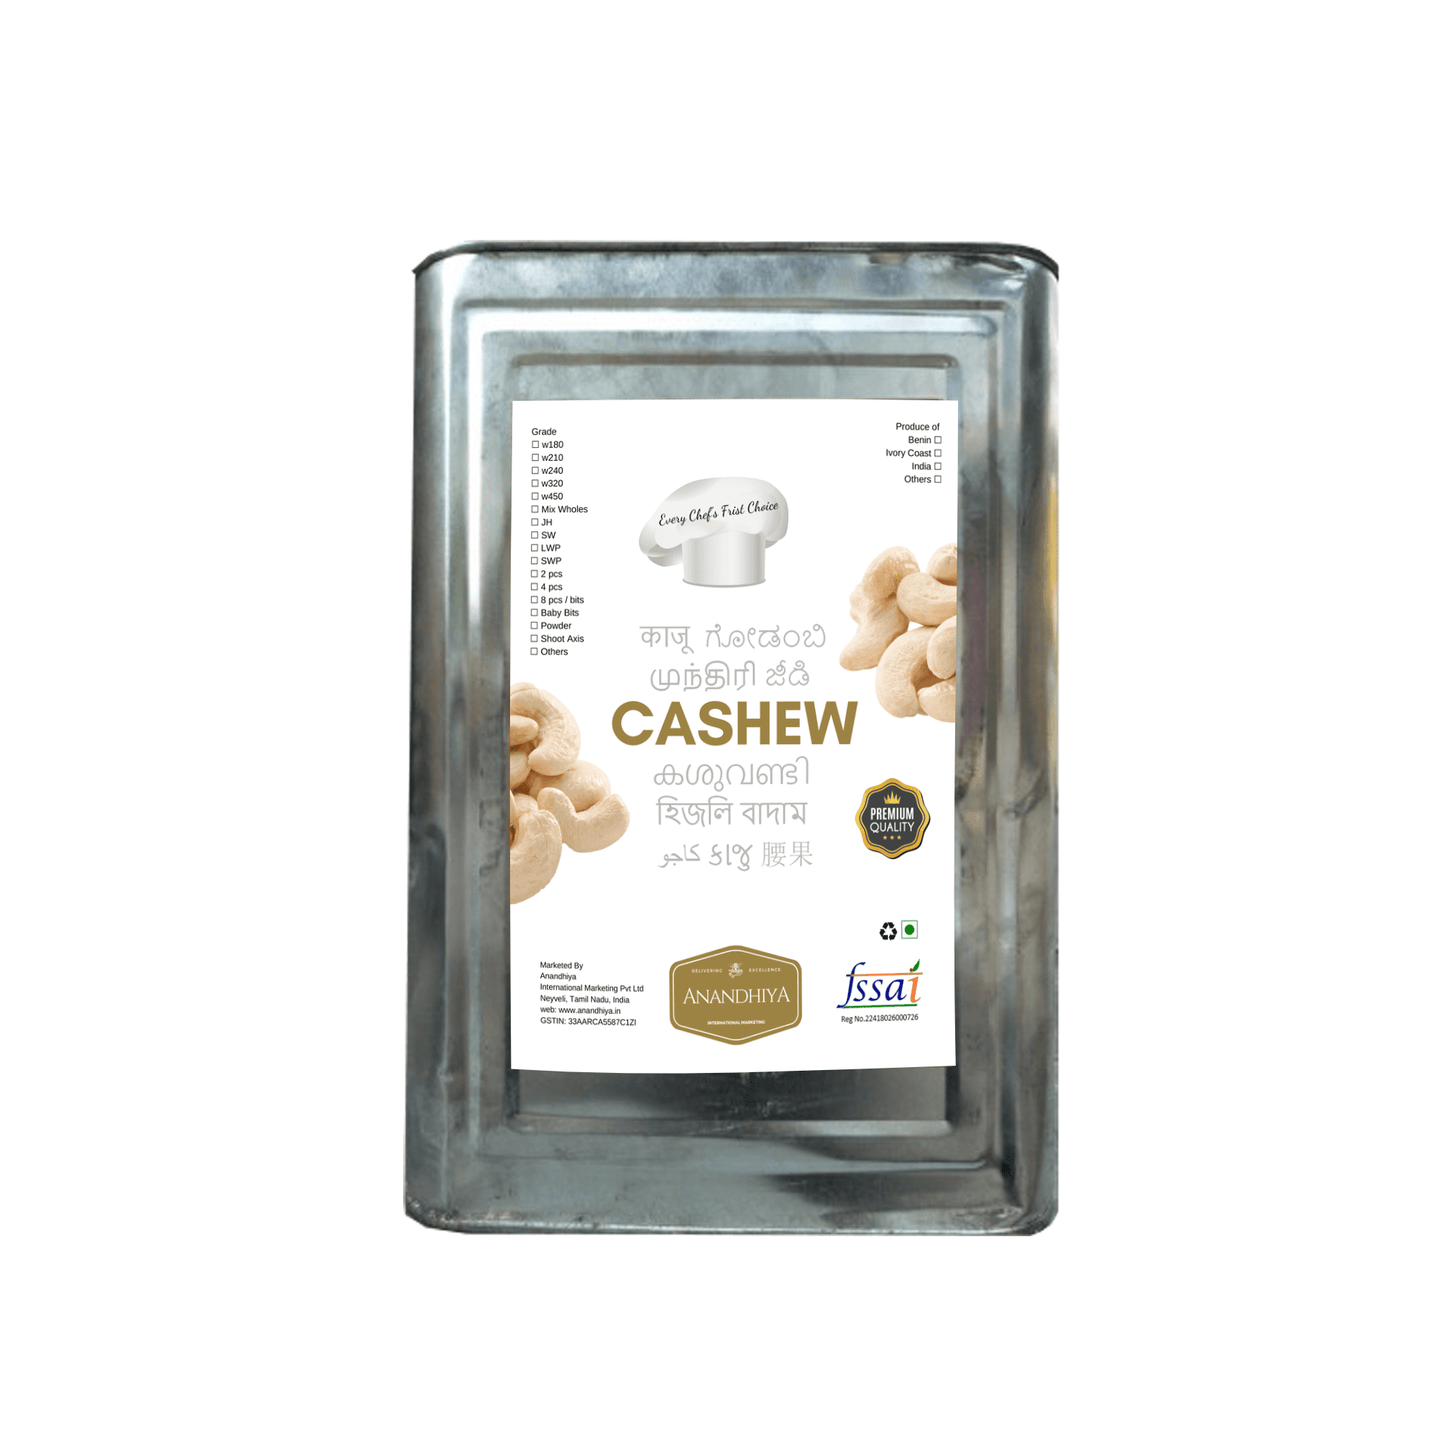 Anandhiya Cashews 10 kg Tin 2 Pieces / Split Cashews